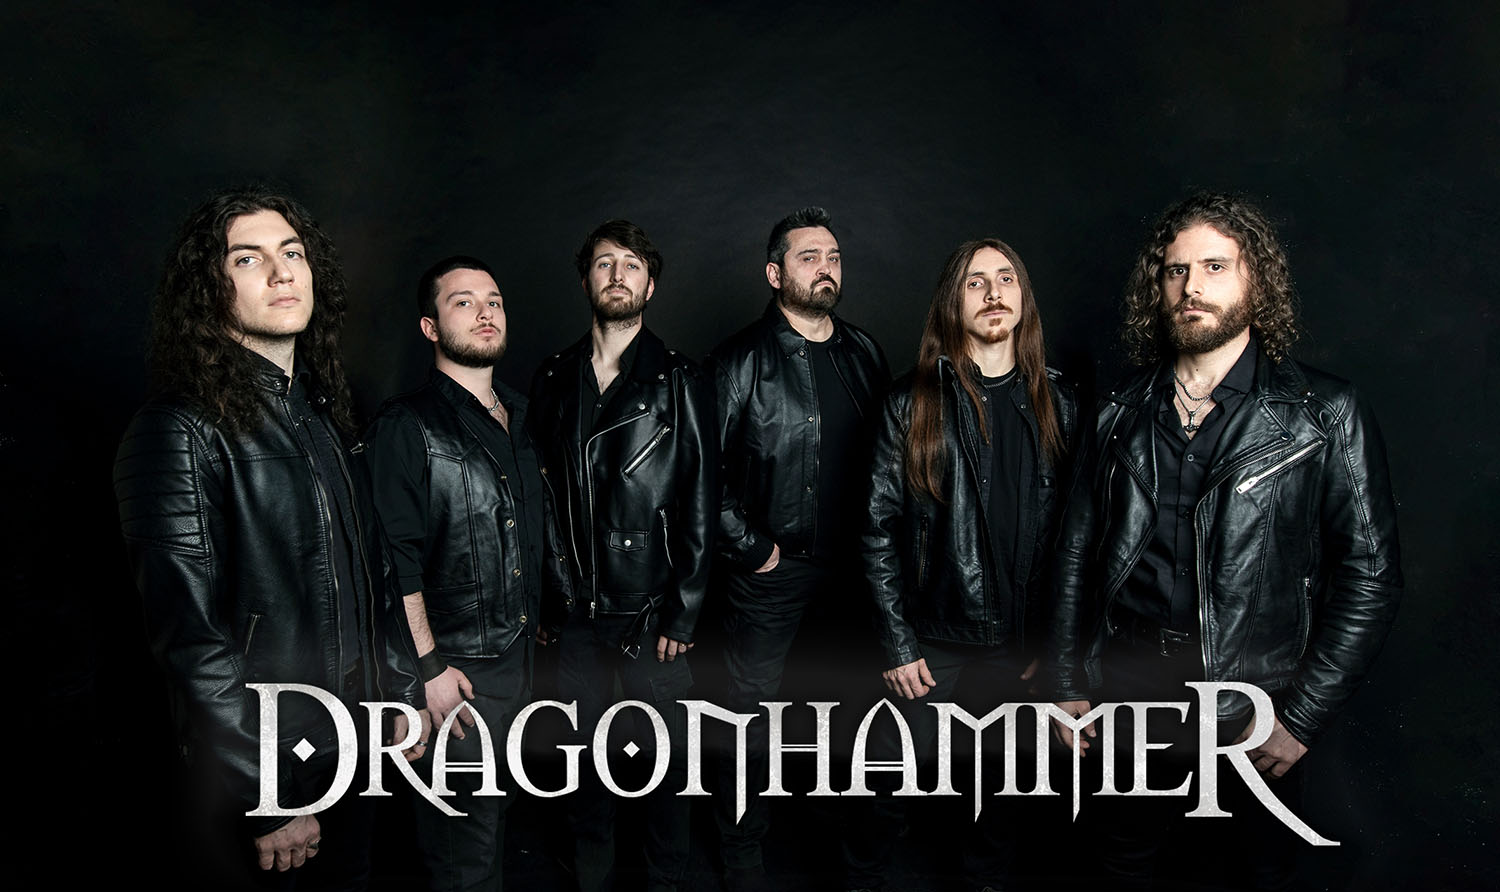 Dragonhammer - band photo LD